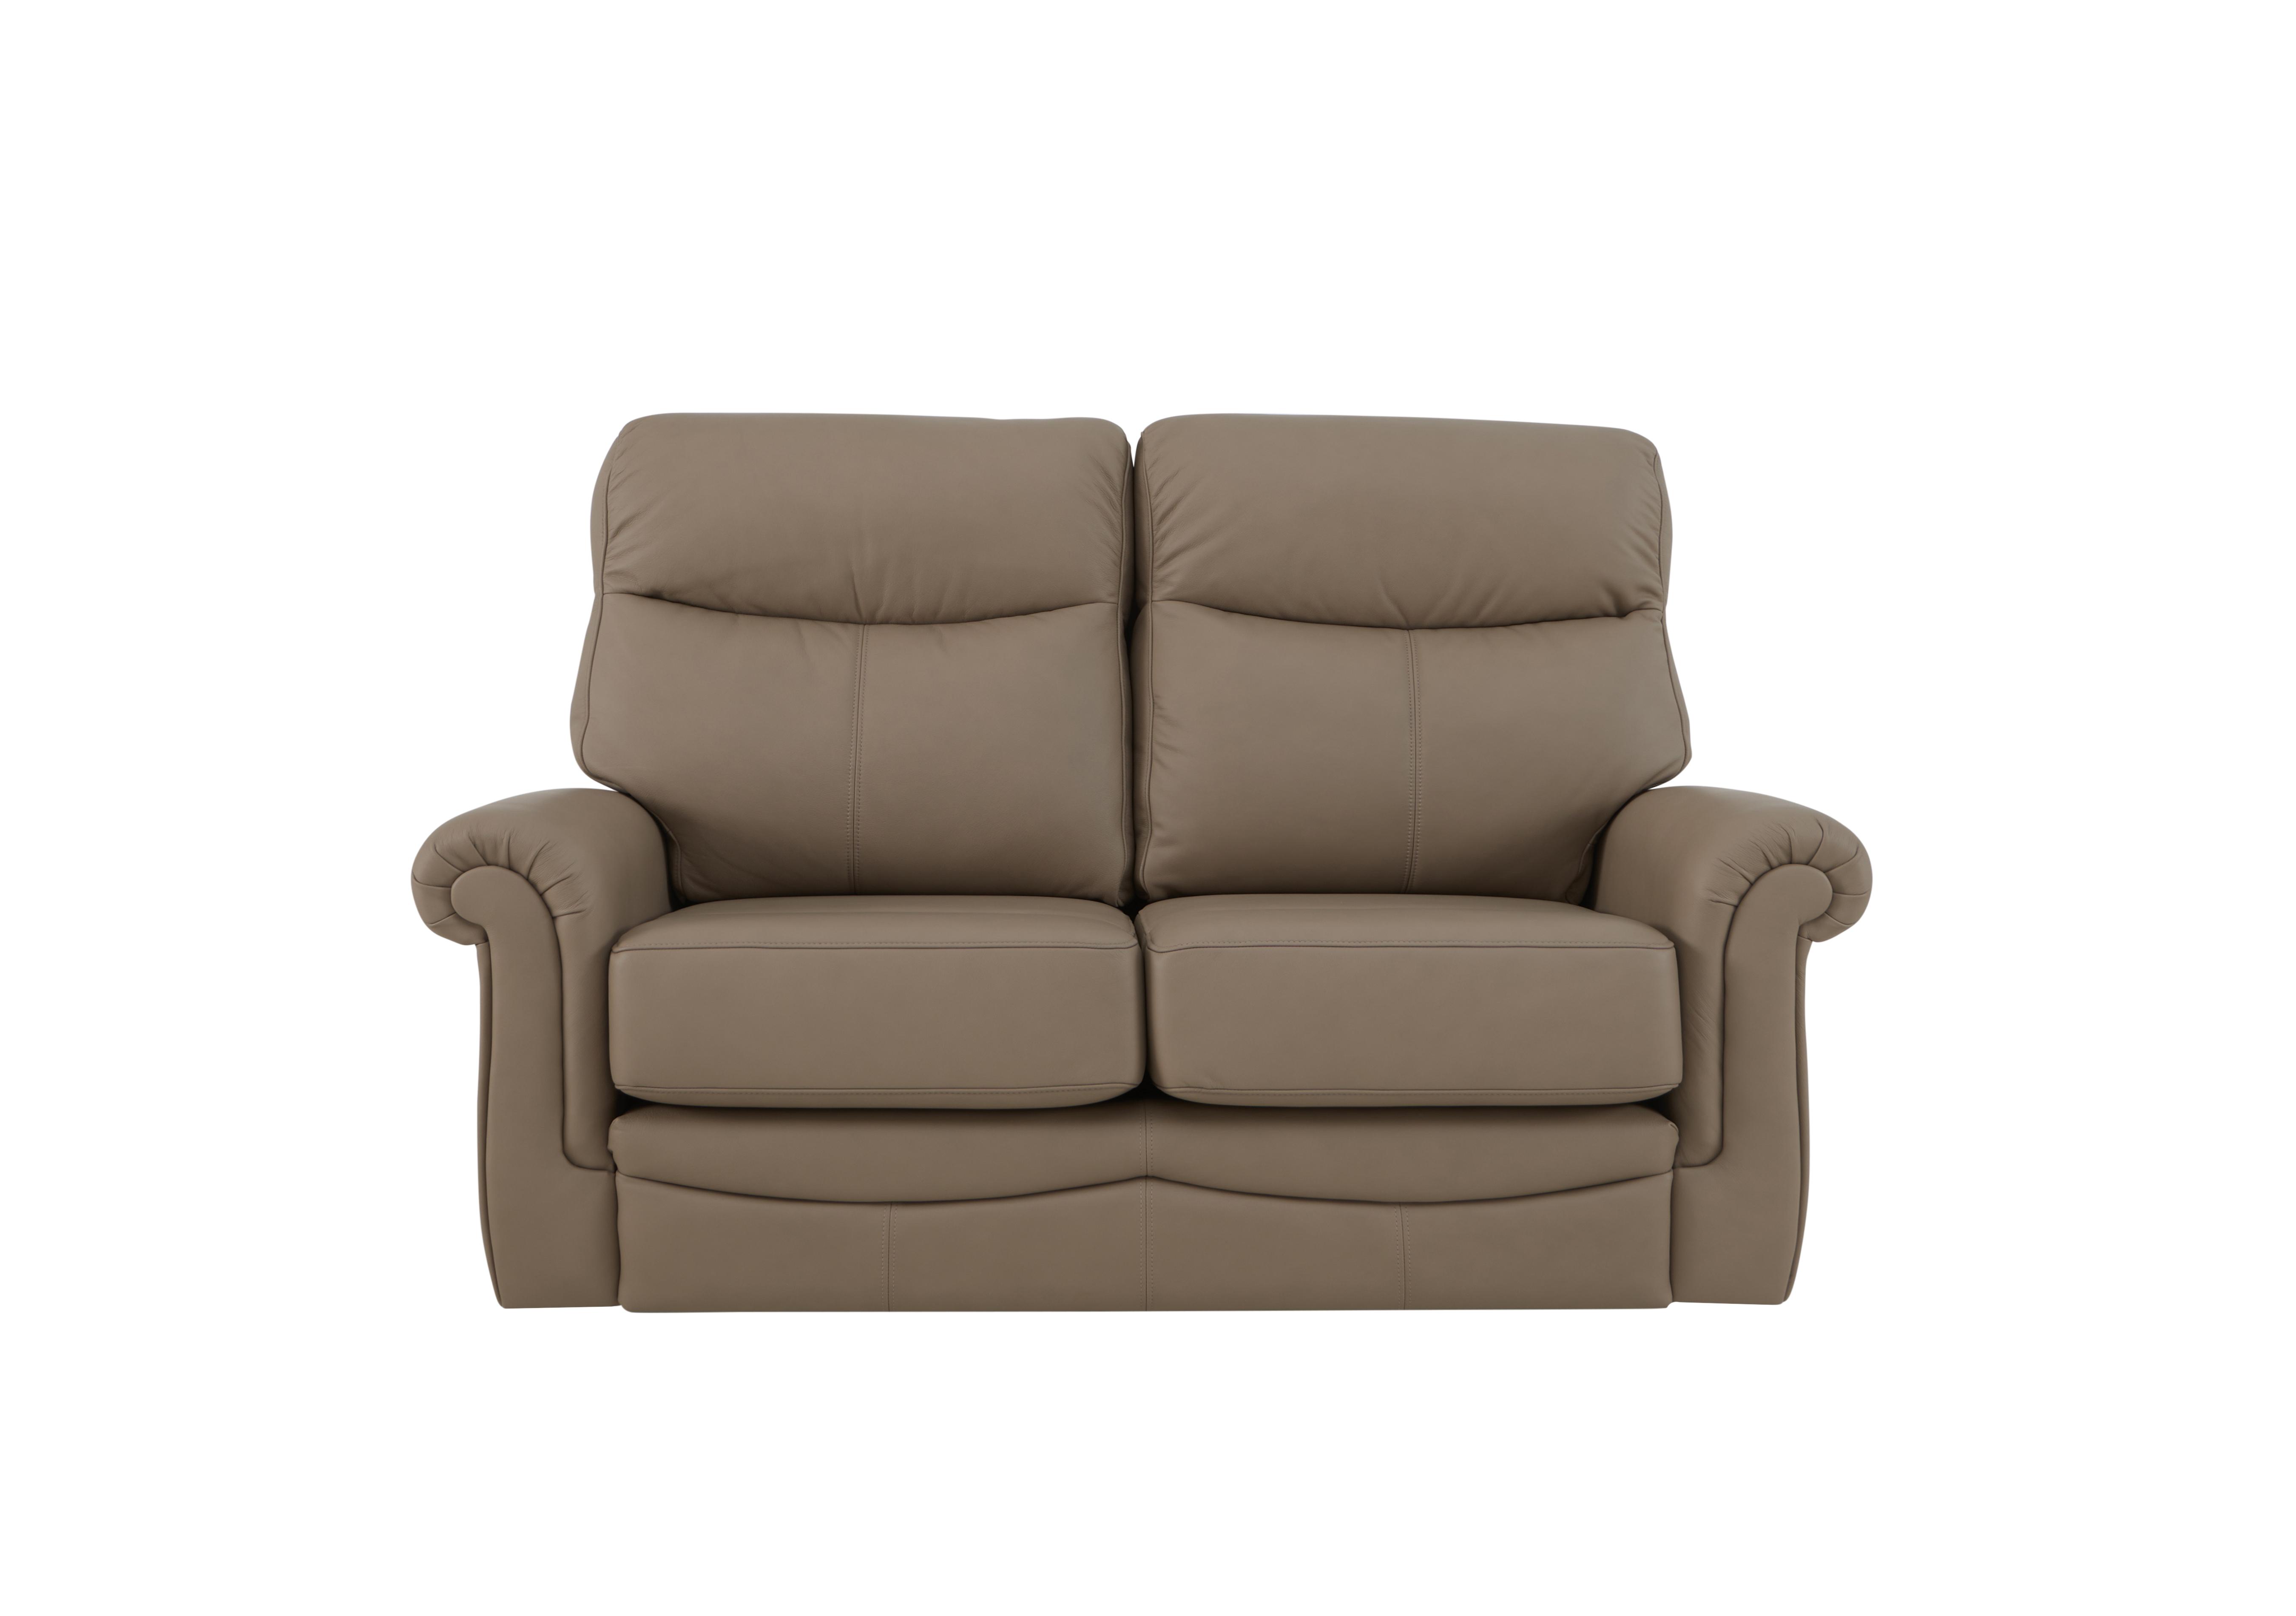 Avon 2 Seater Leather Sofa in L846 Cambridge Taupe on Furniture Village